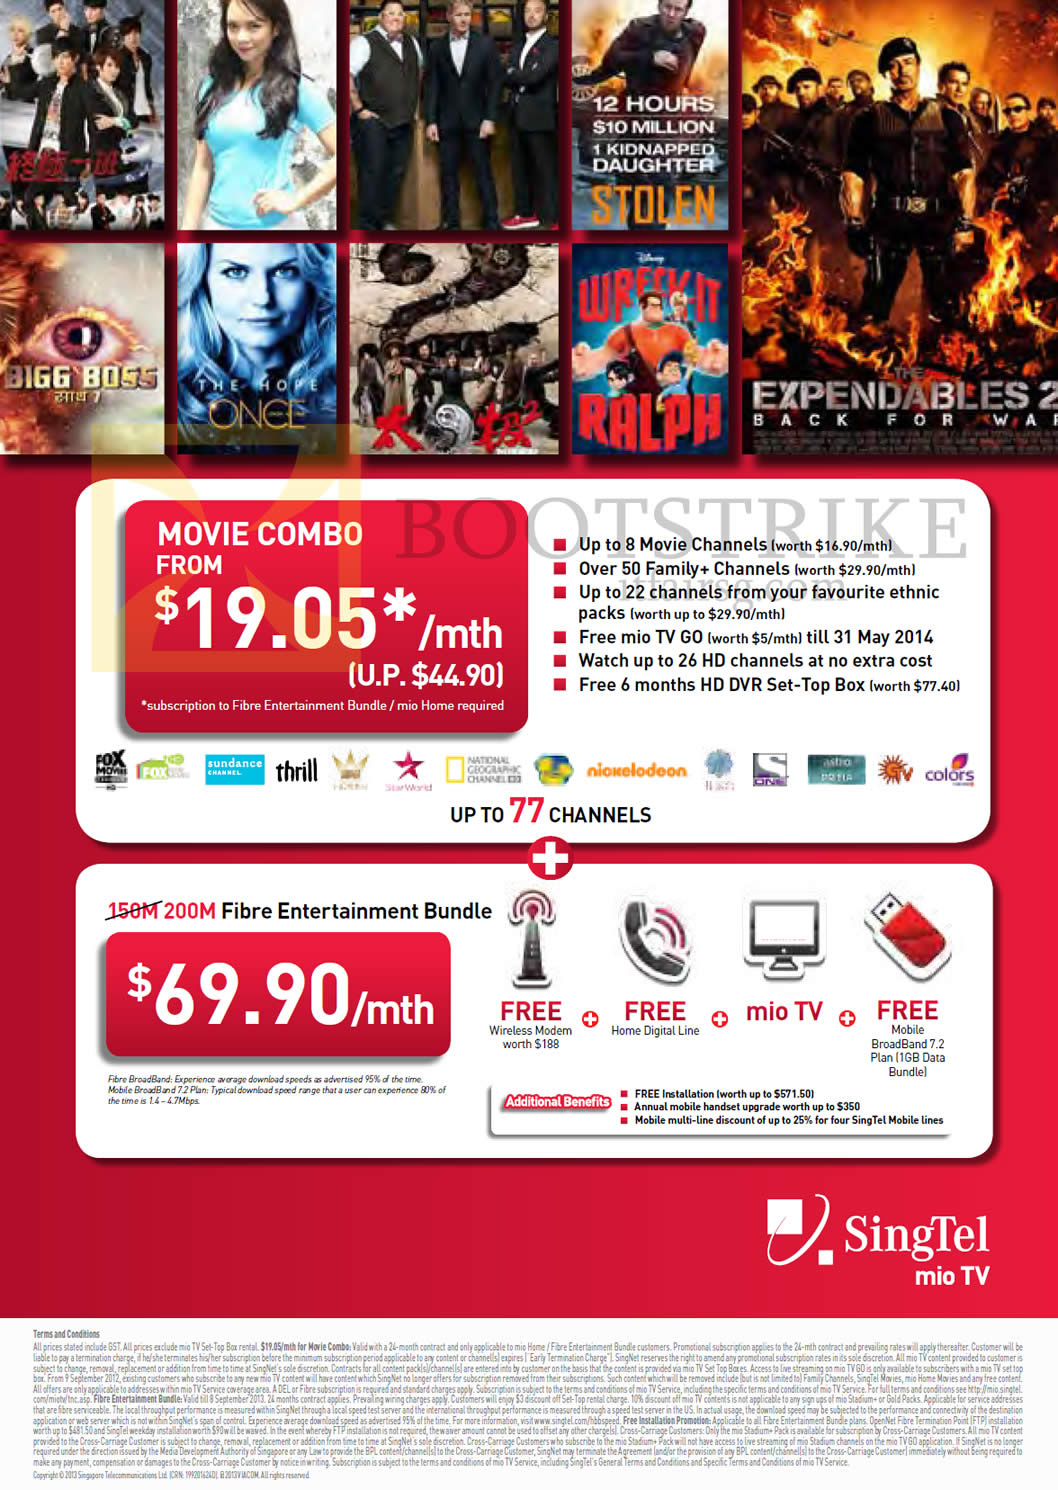 COMEX 2013 price list image brochure of Singtel Mio TV Movie Combo, 69.90 Fibre Broadband Entertainment Bundle, Fixed Line, Mobile Broadband